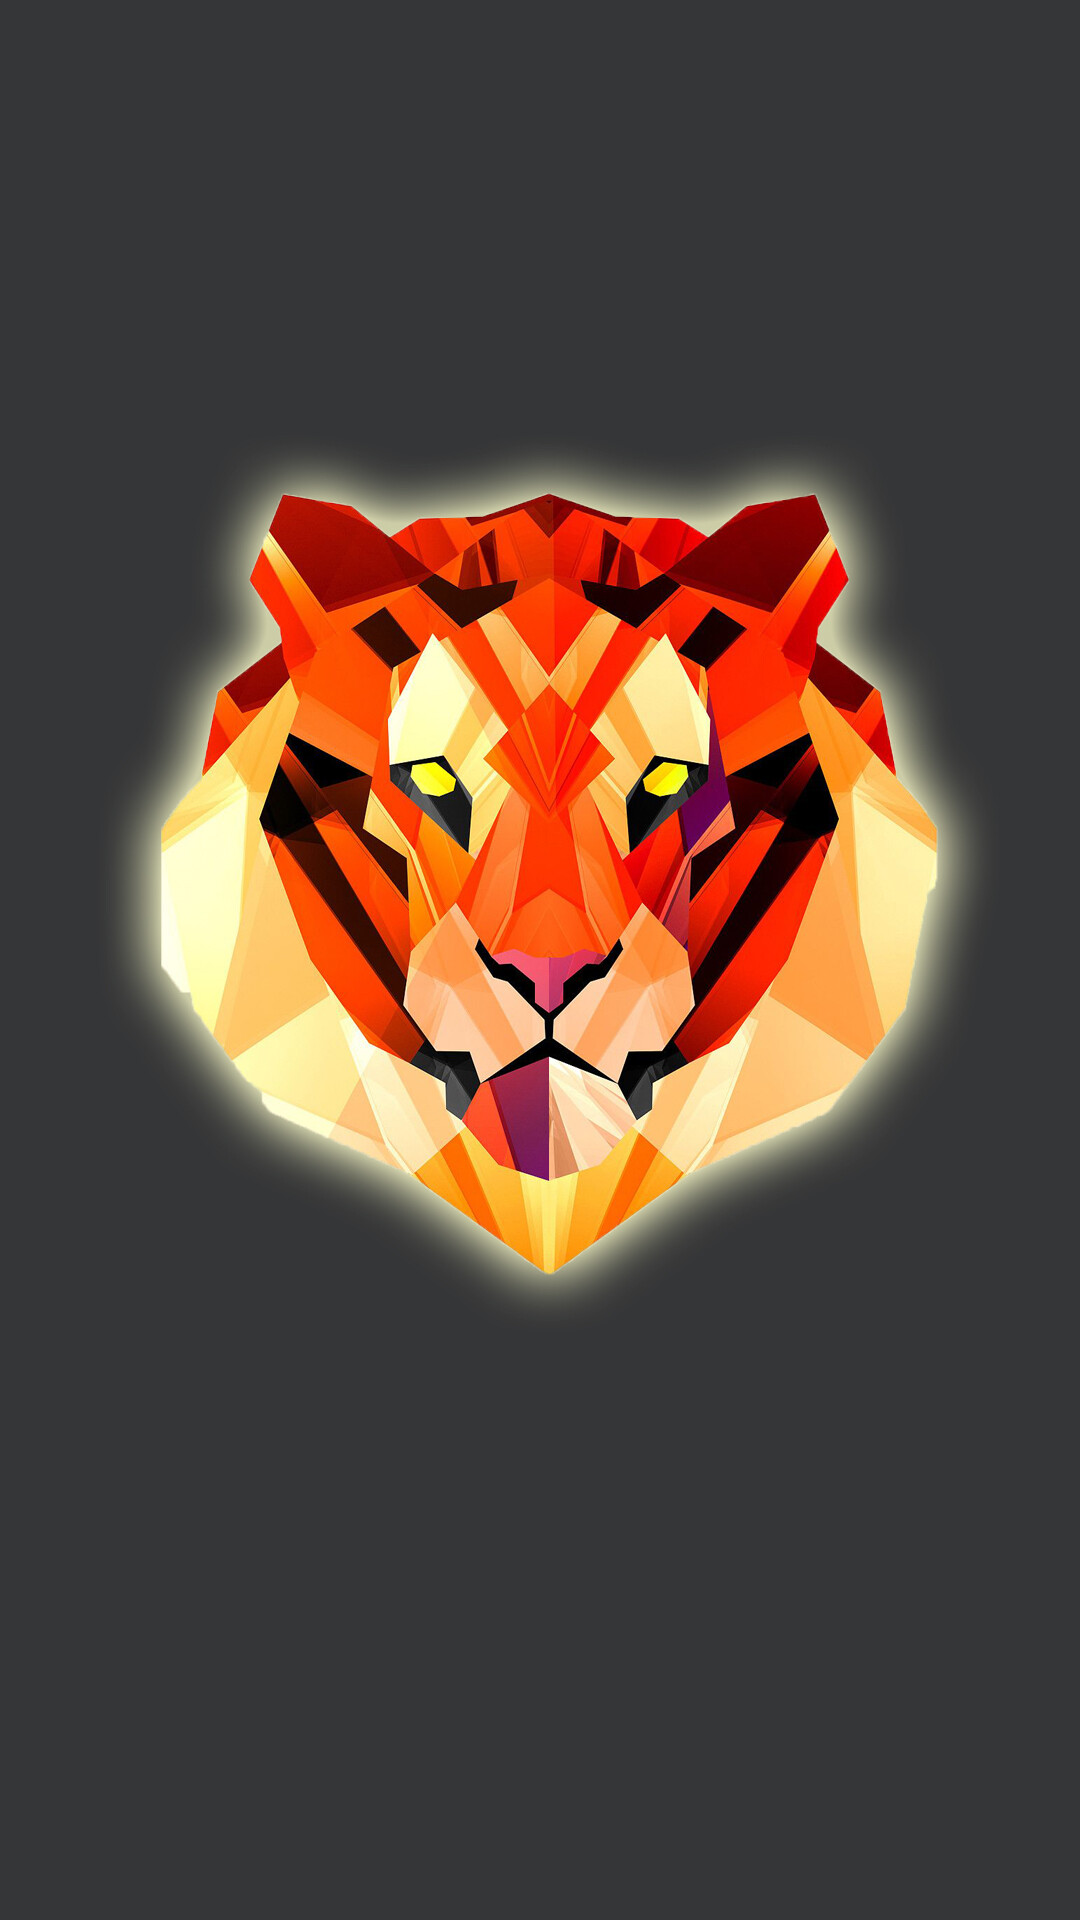 Geometric tiger face wallpaper, Creative animal design, Unique animal representation, Bold animal concept, 1080x1920 Full HD Phone